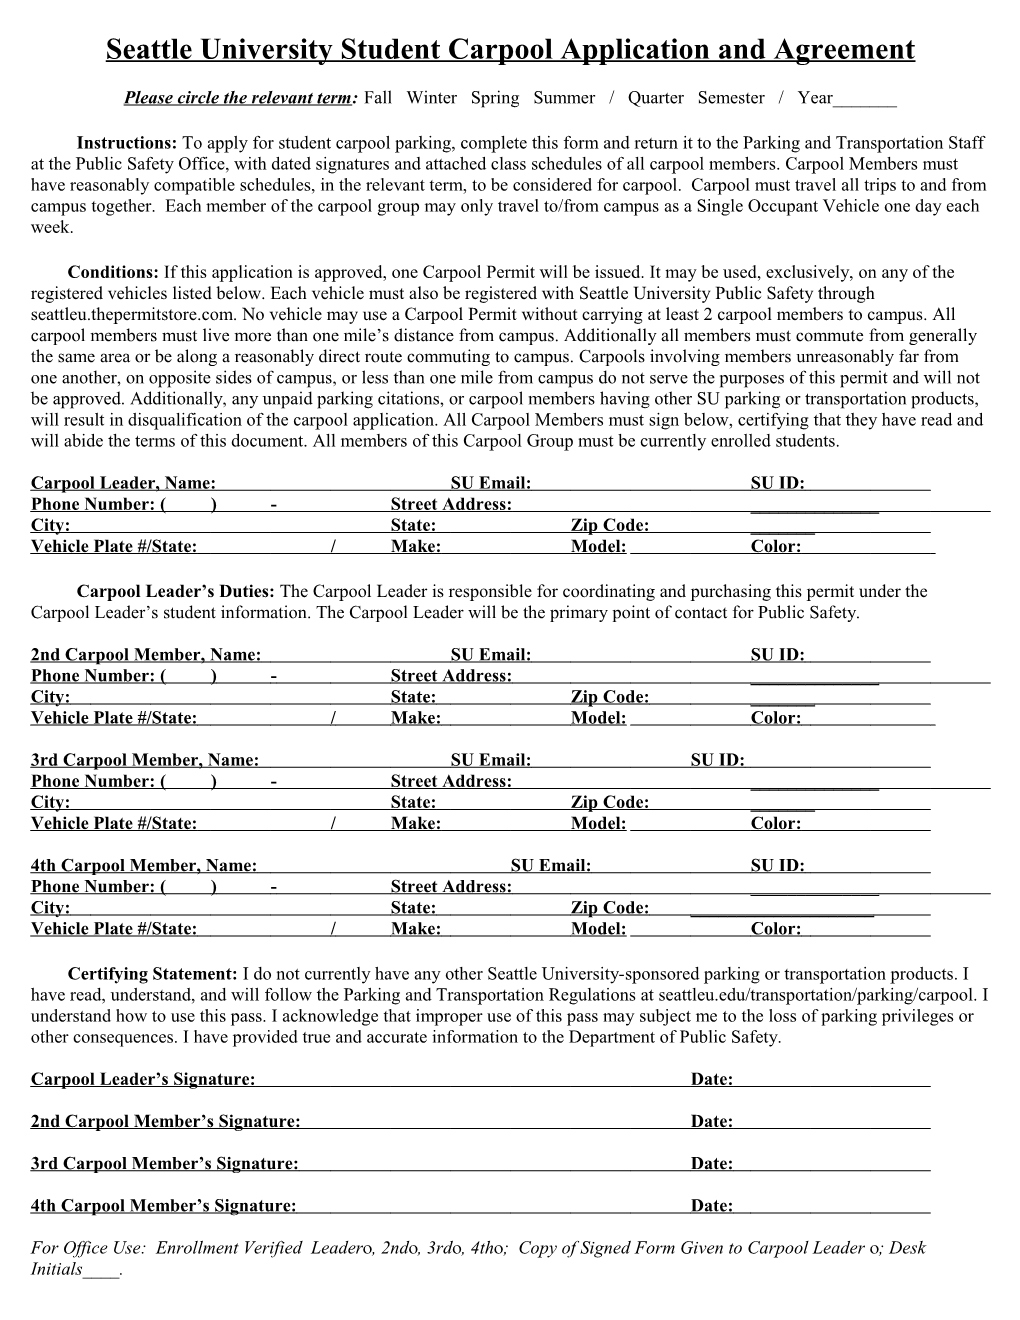 Seattle University Student Carpool Application and Agreement